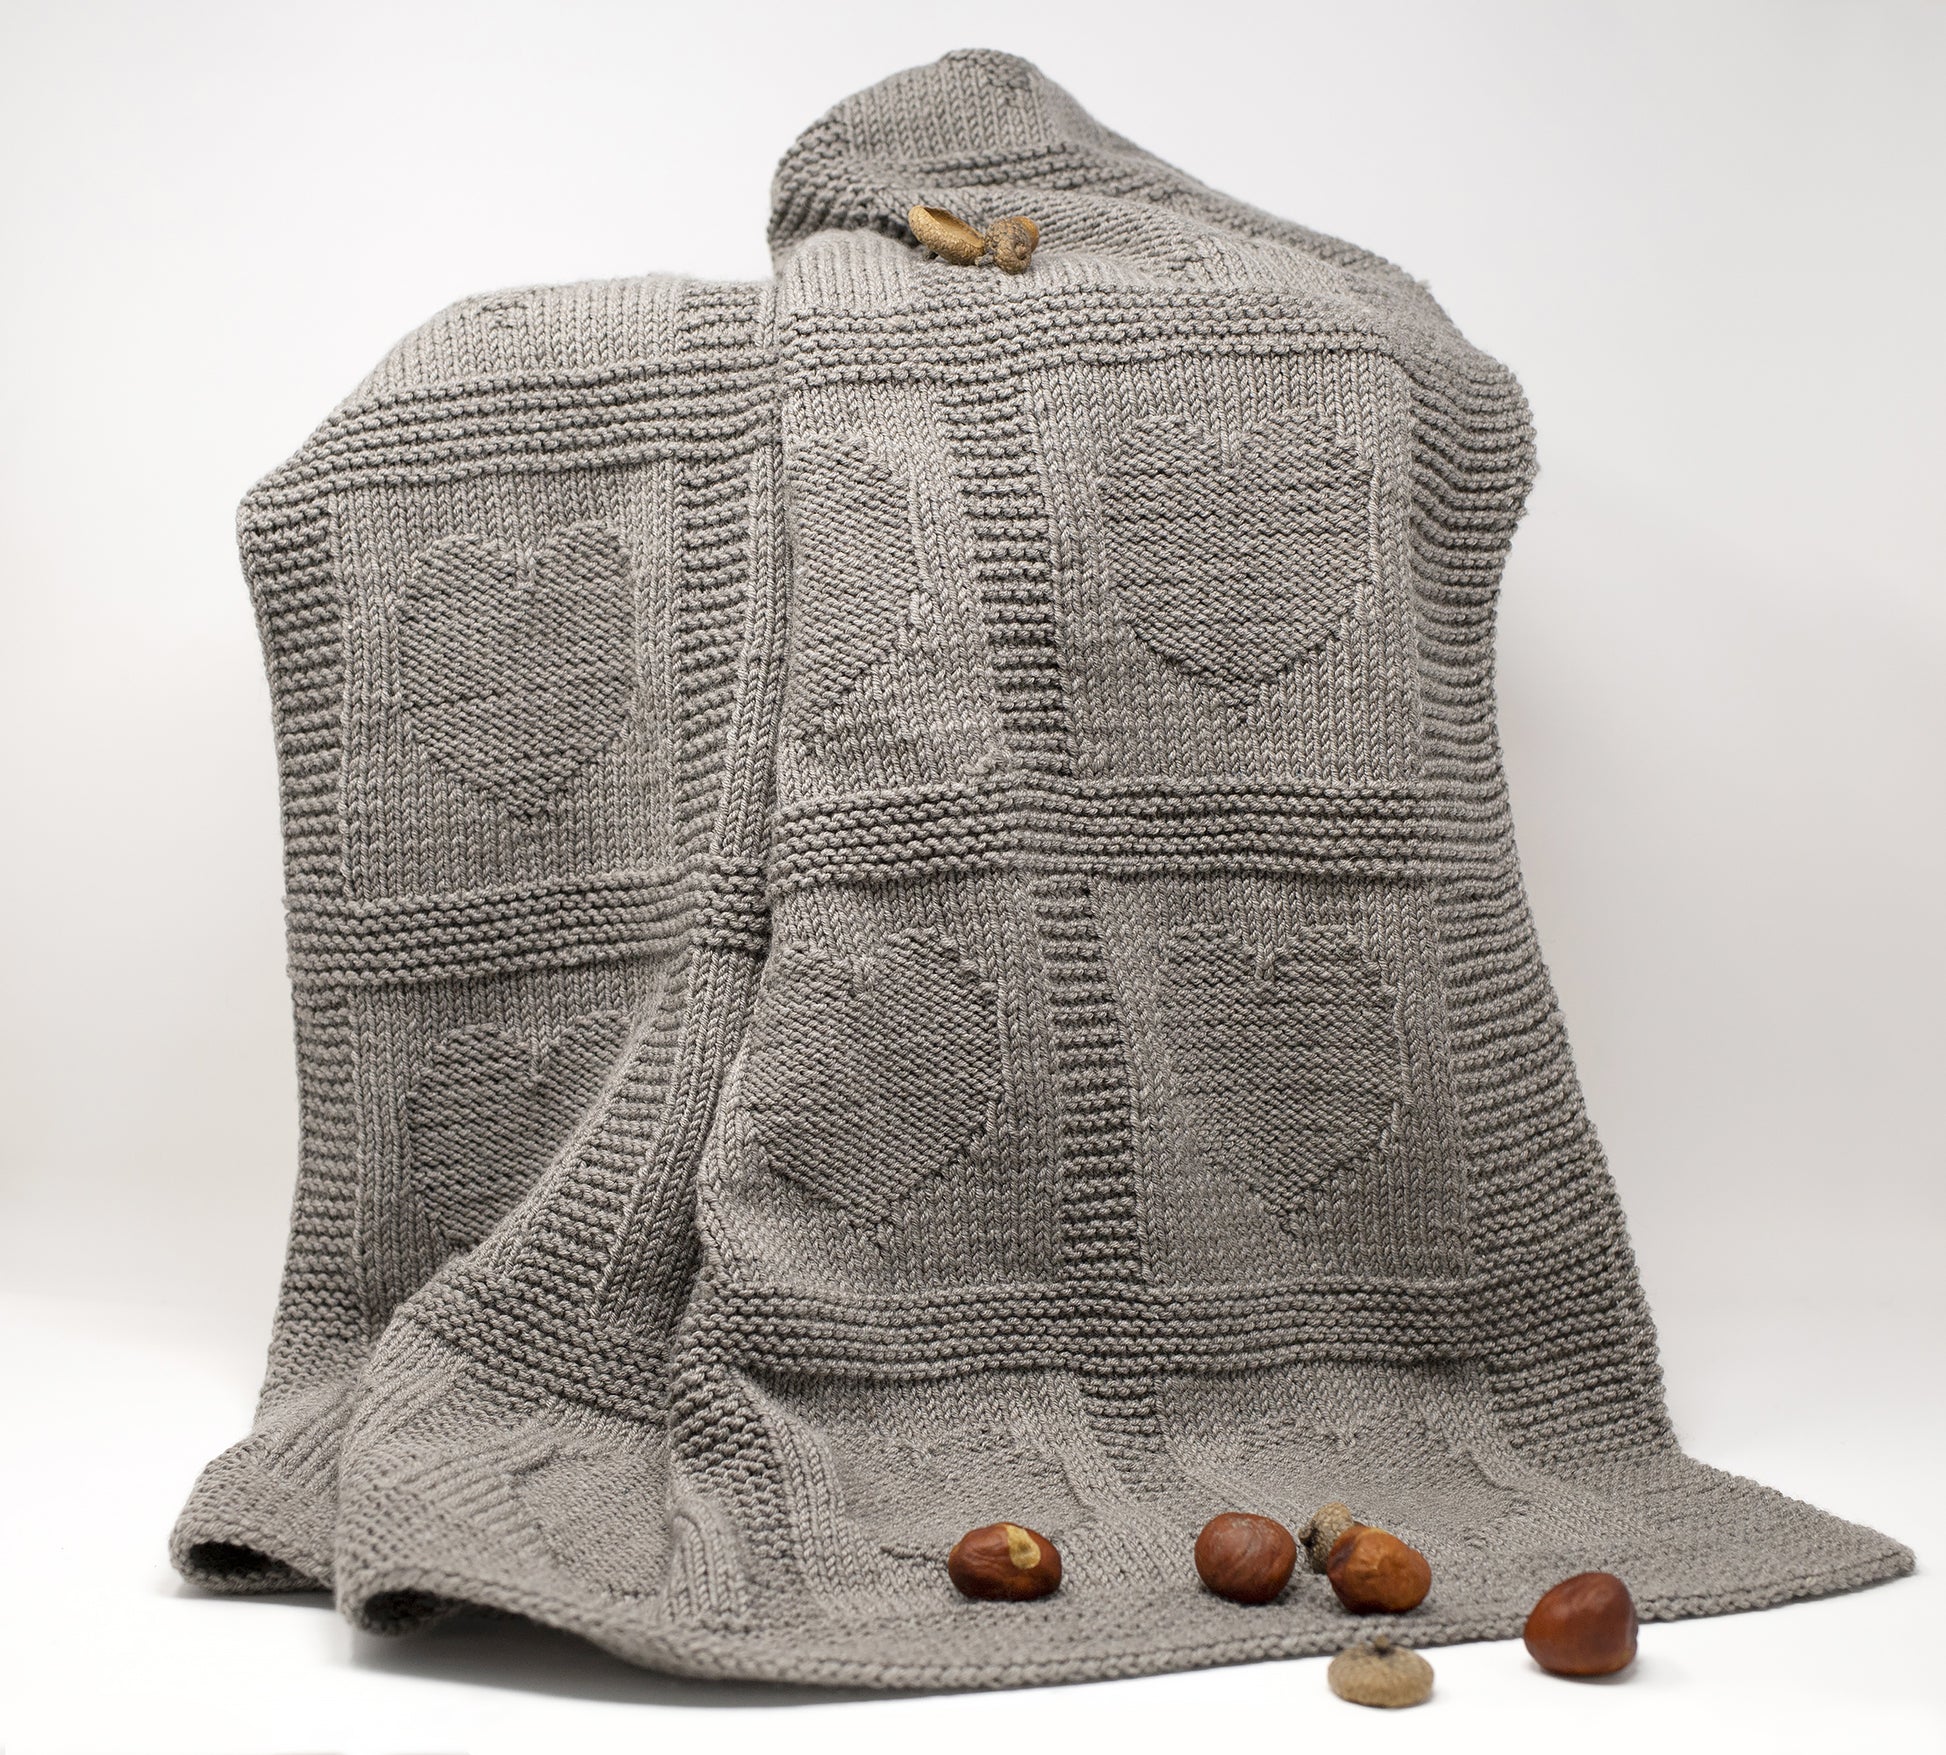 Merino wool baby blanket in Hearts pattern design